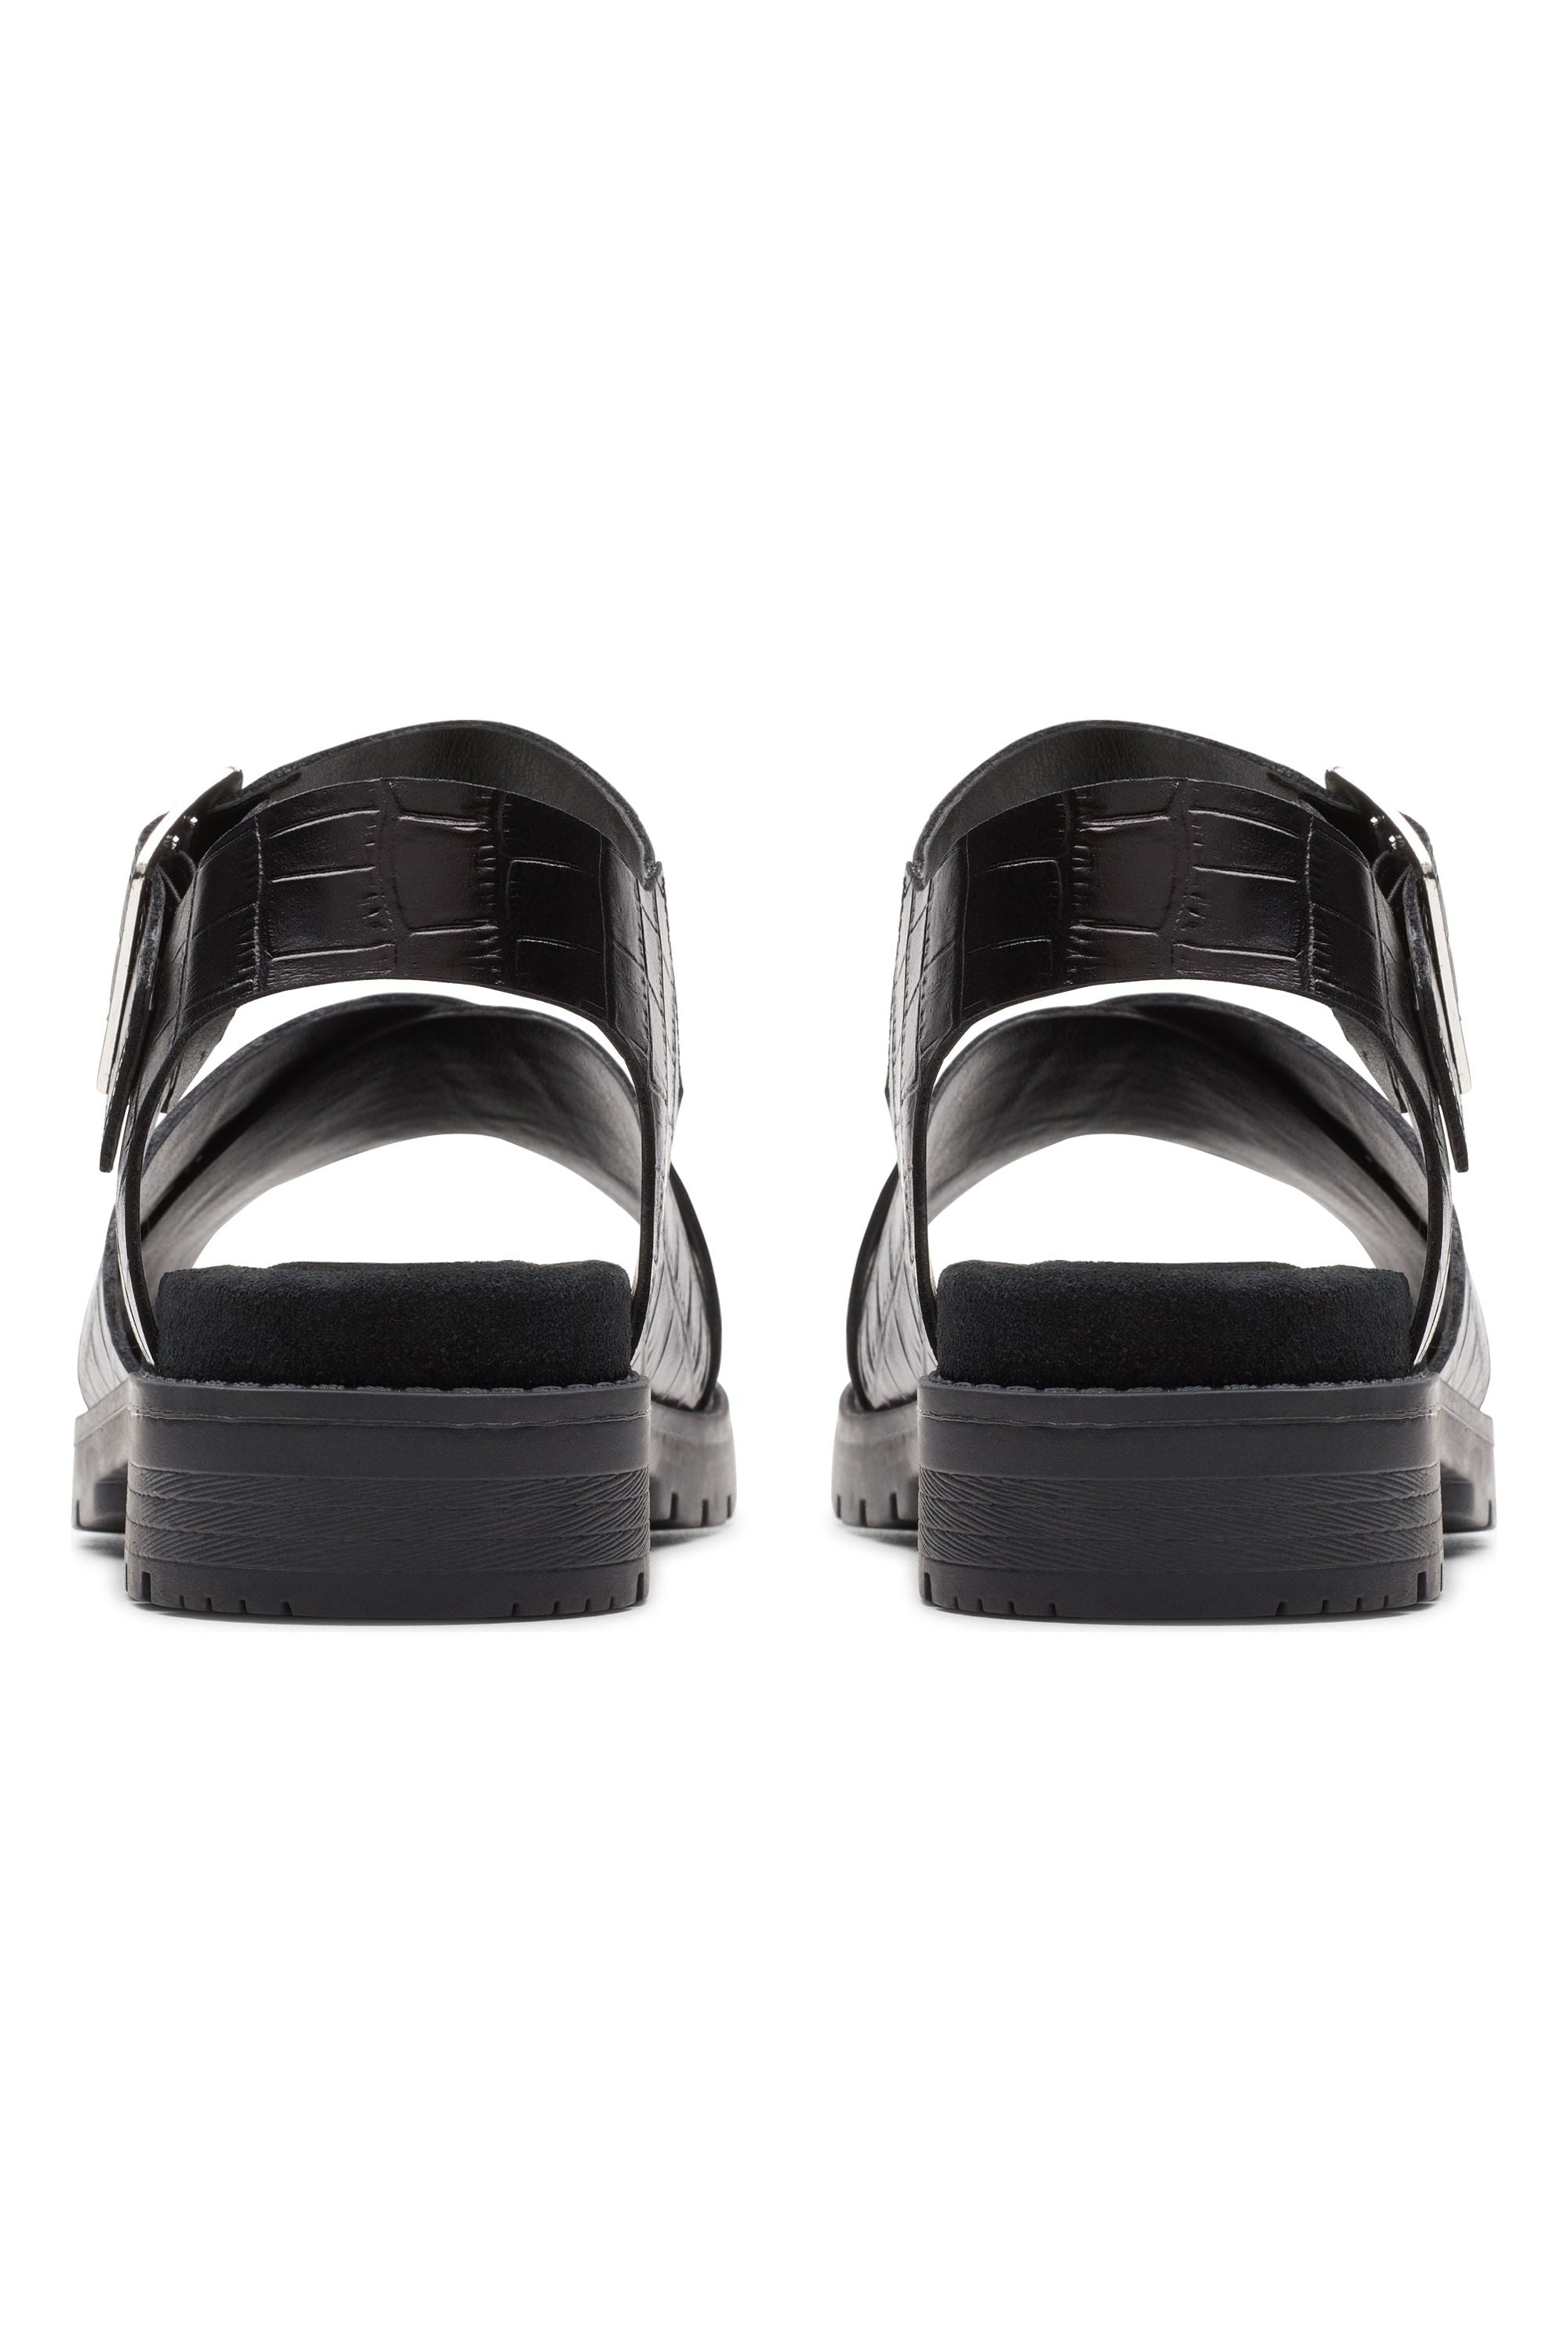 Clarks Orinoco Cross black Interest sandal